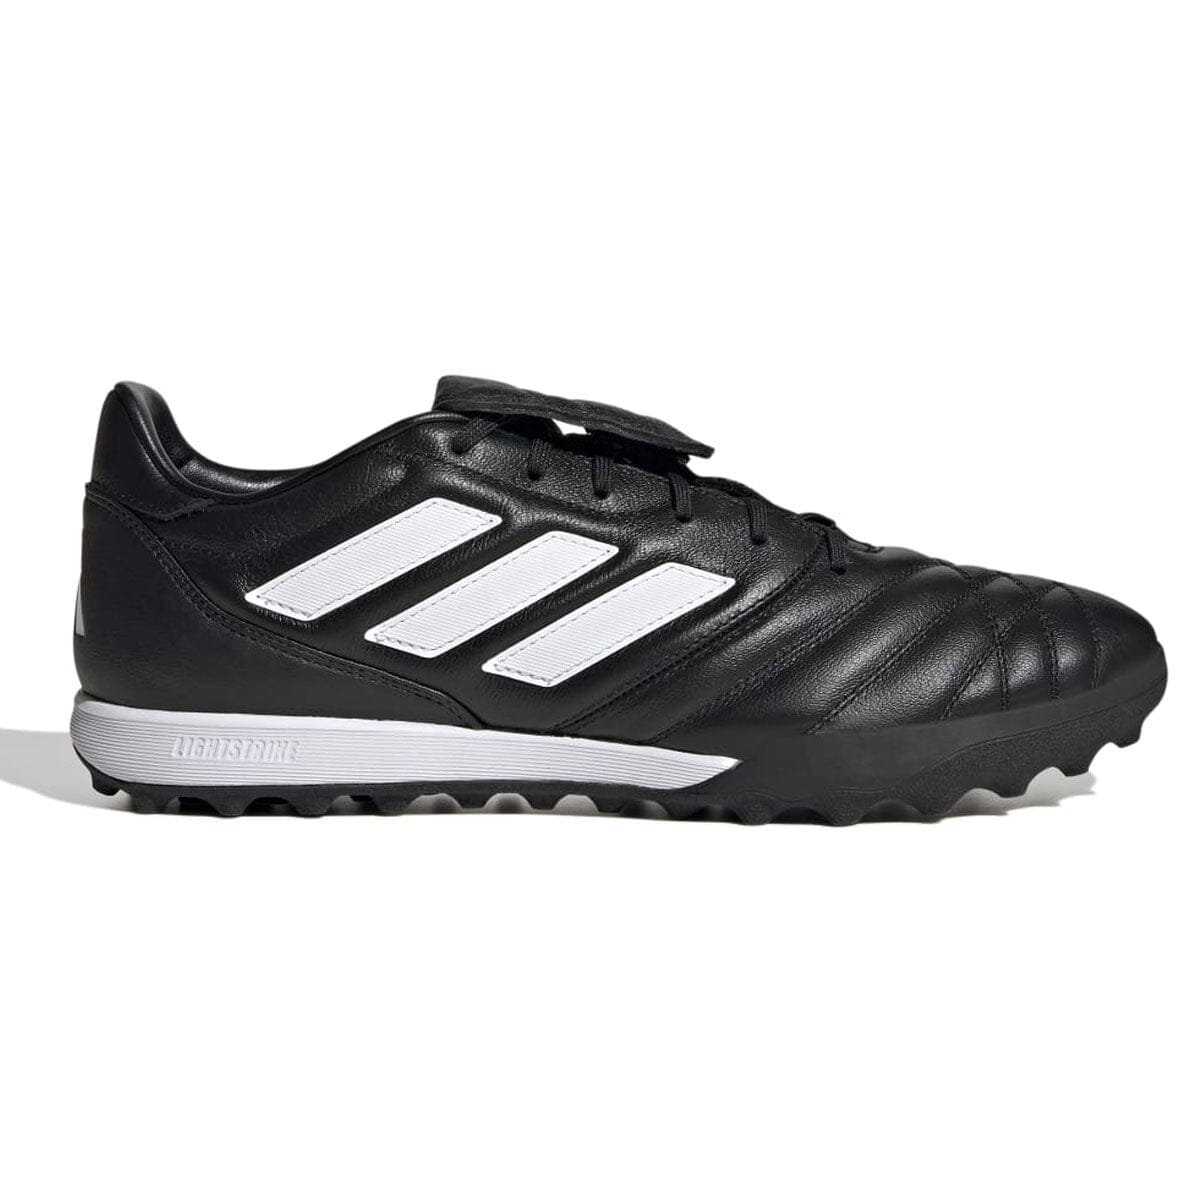 adidas Unisex Copa Gloro Turf Shoes | FZ6121 Cleats Adidas 7 Core Black / FTWR White / Core Black 